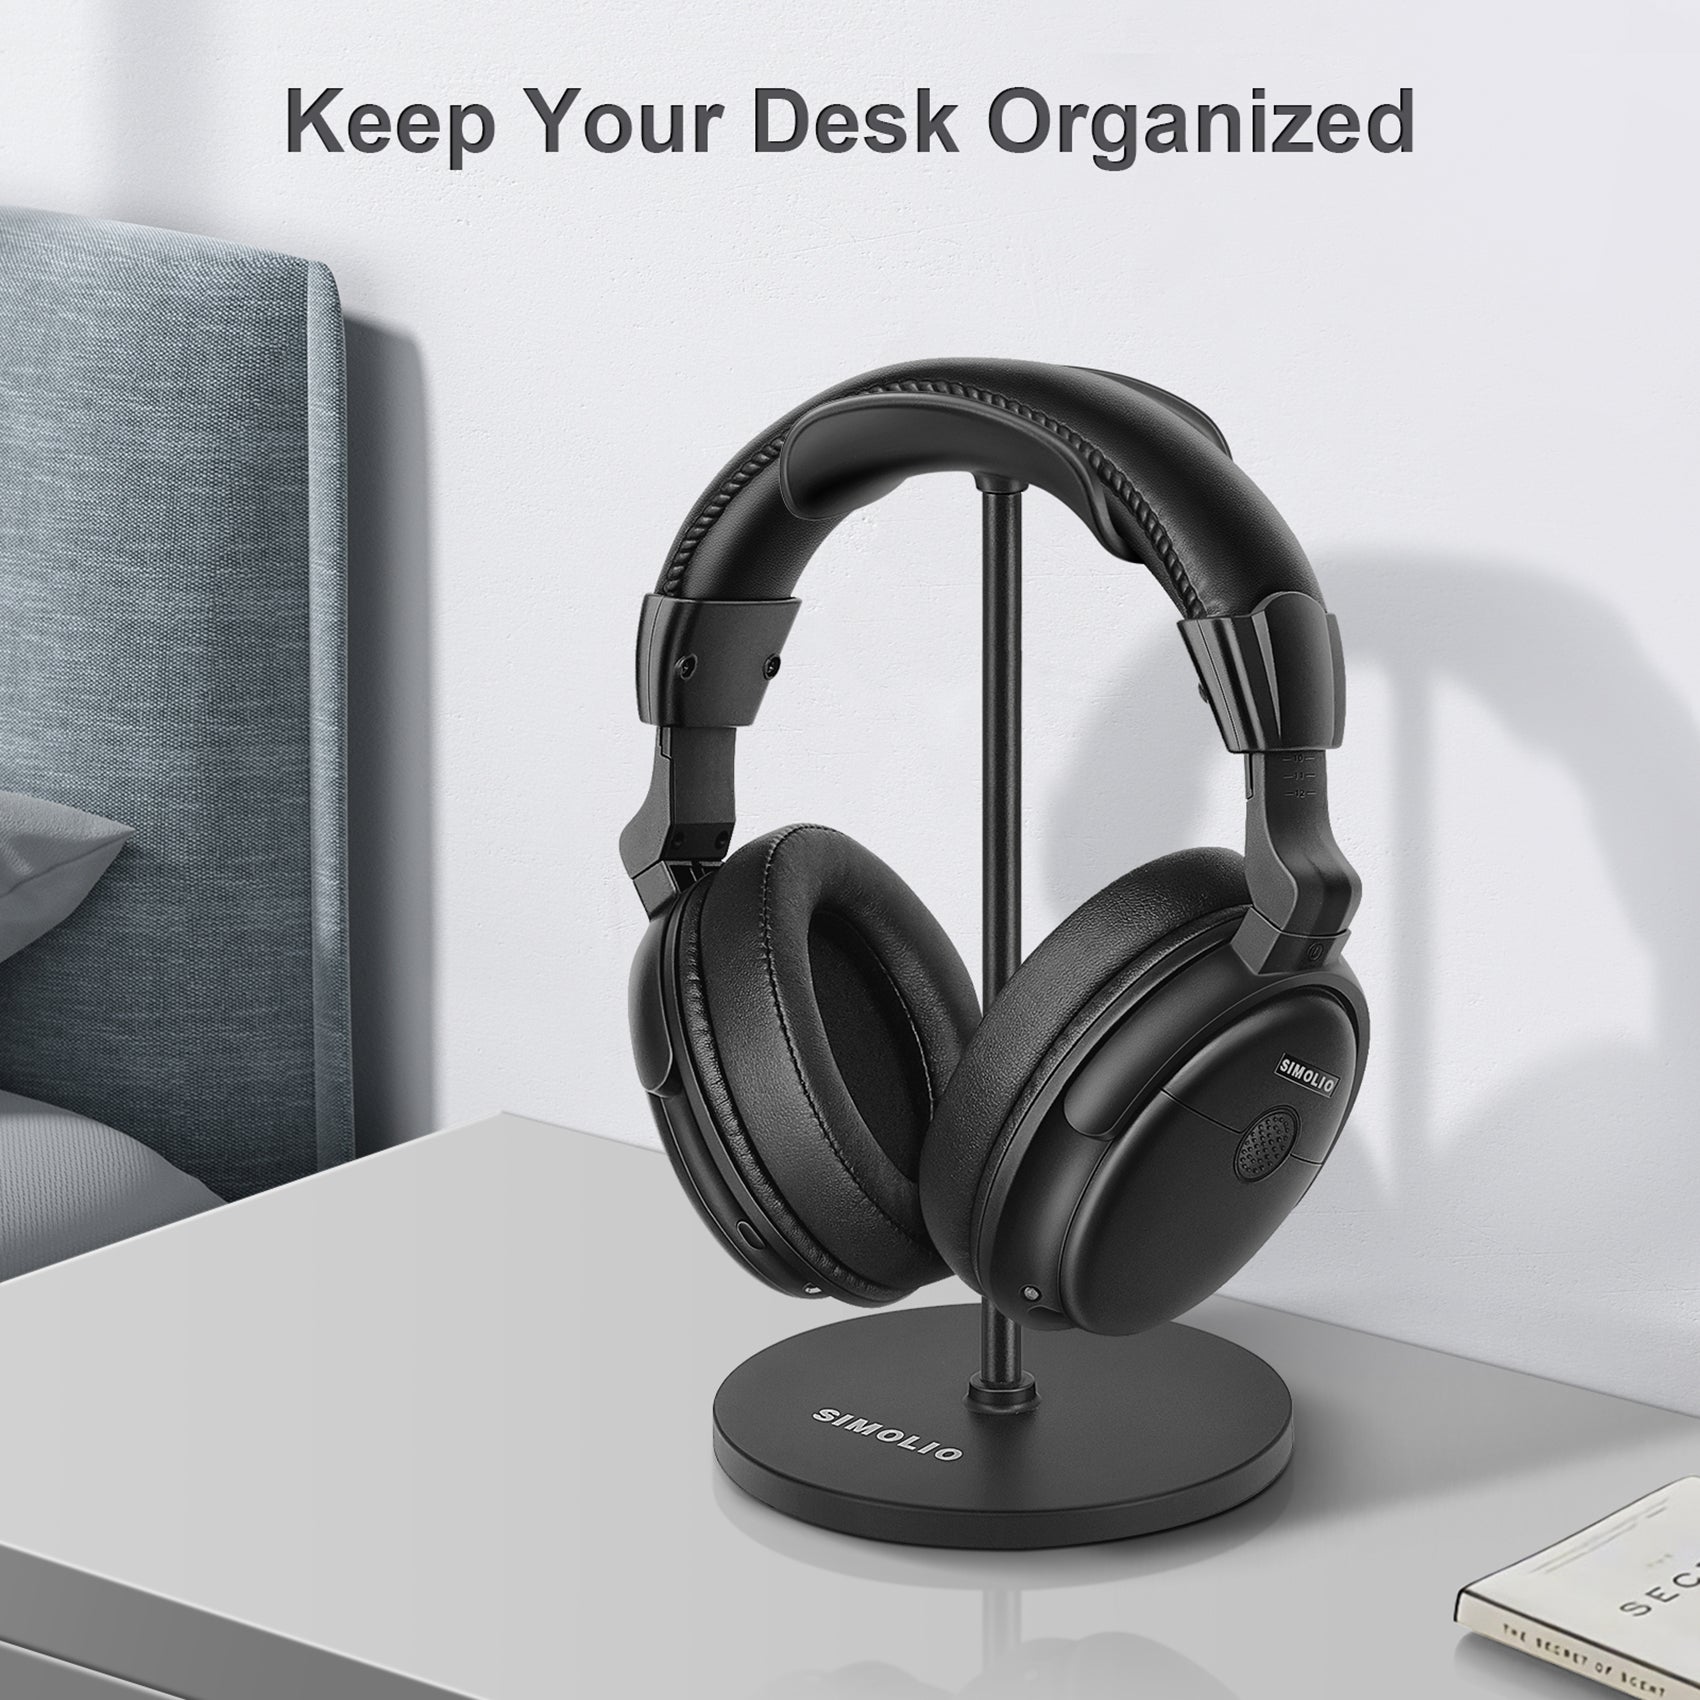 SIMOLIO Solid Anti-Slip Headset Holder for Desk Organized